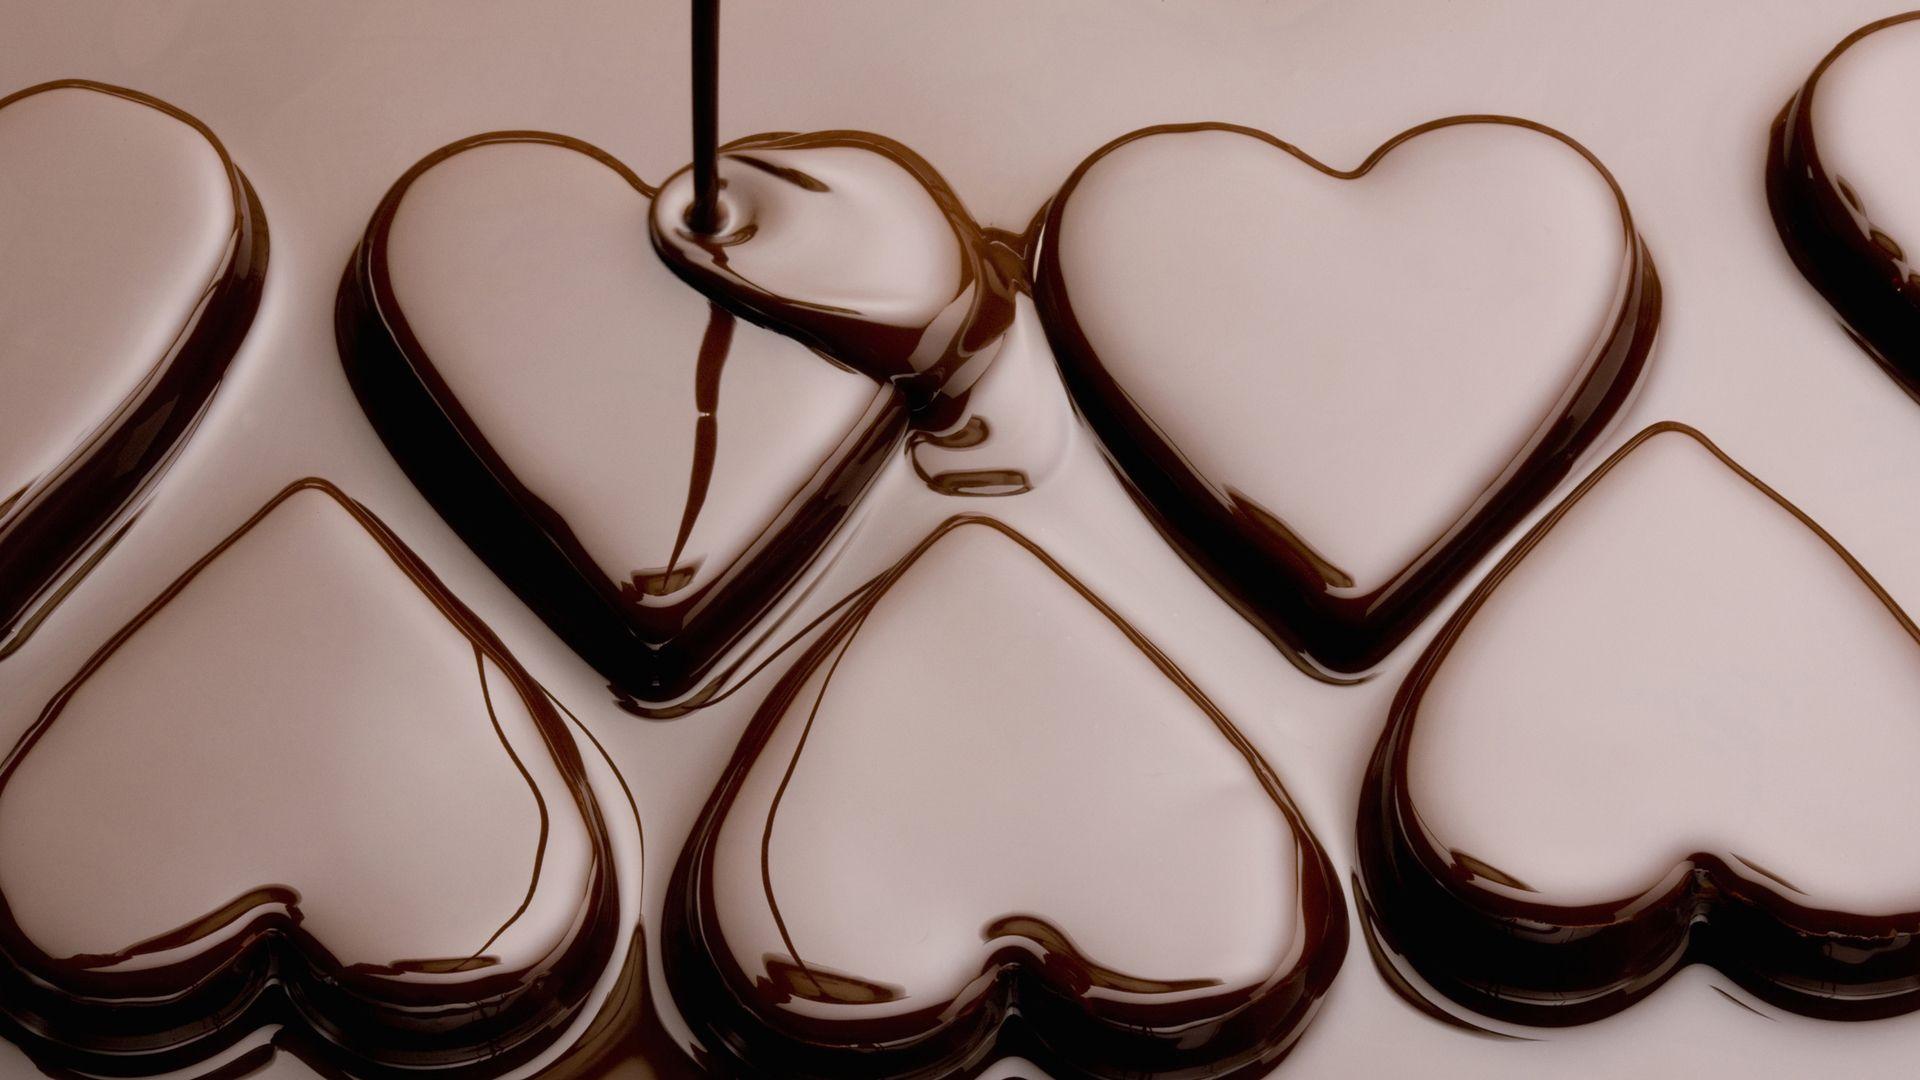 dark chocolate day happy chocolate day sweet HD wallpaper 2015 3